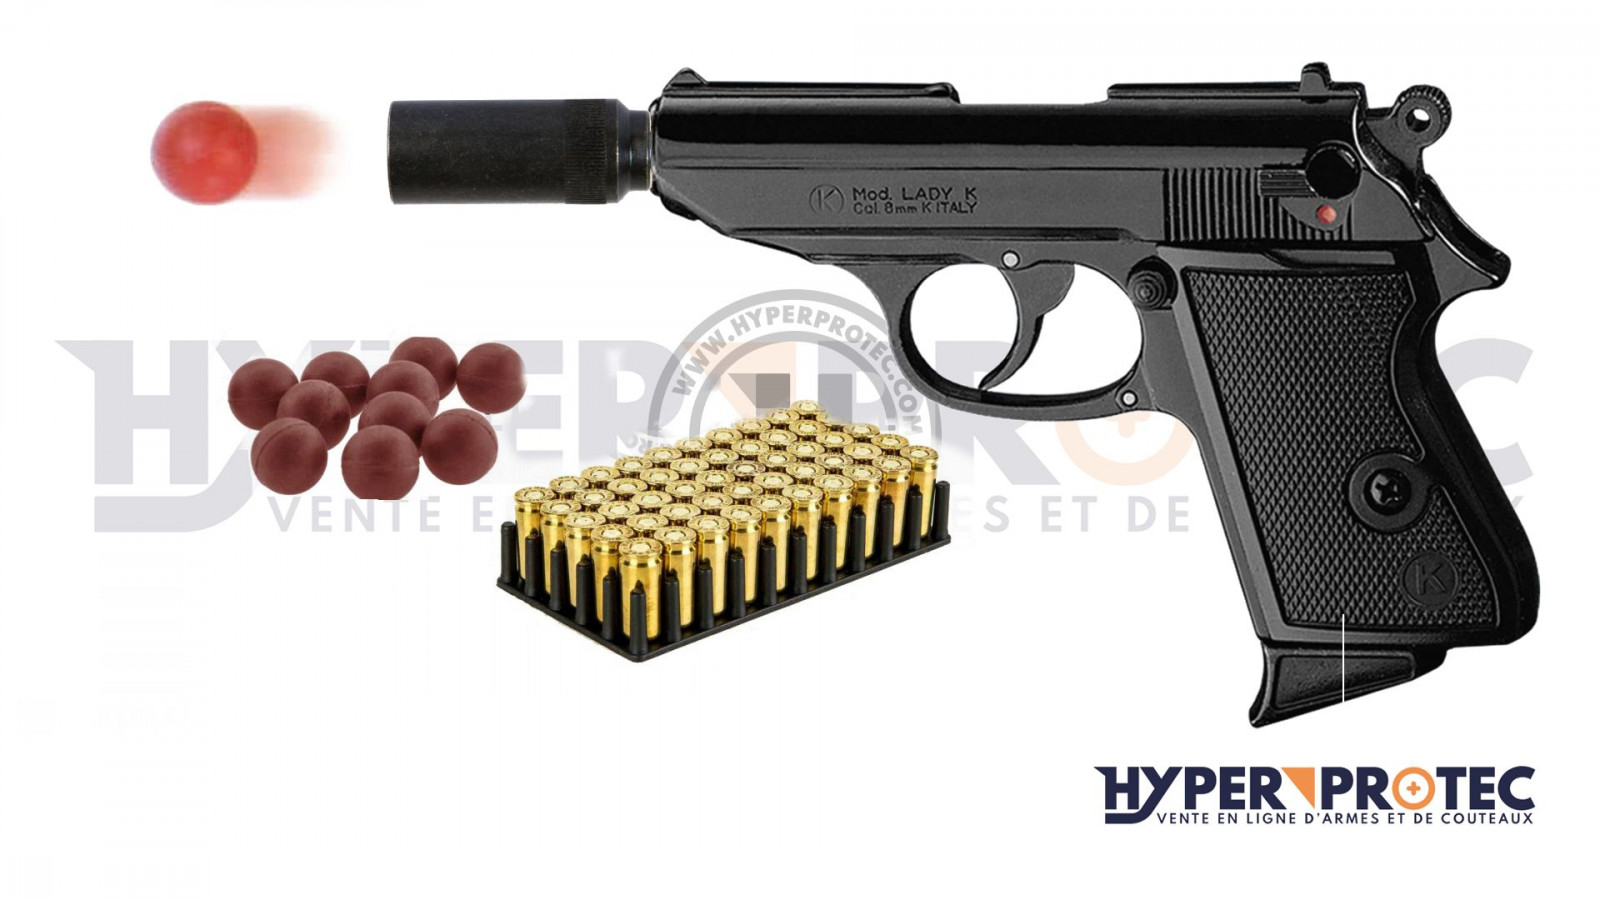 Pistolet à blanc Kimar Lady-K Chrome 9 mm PAK - Armurerie Loisir